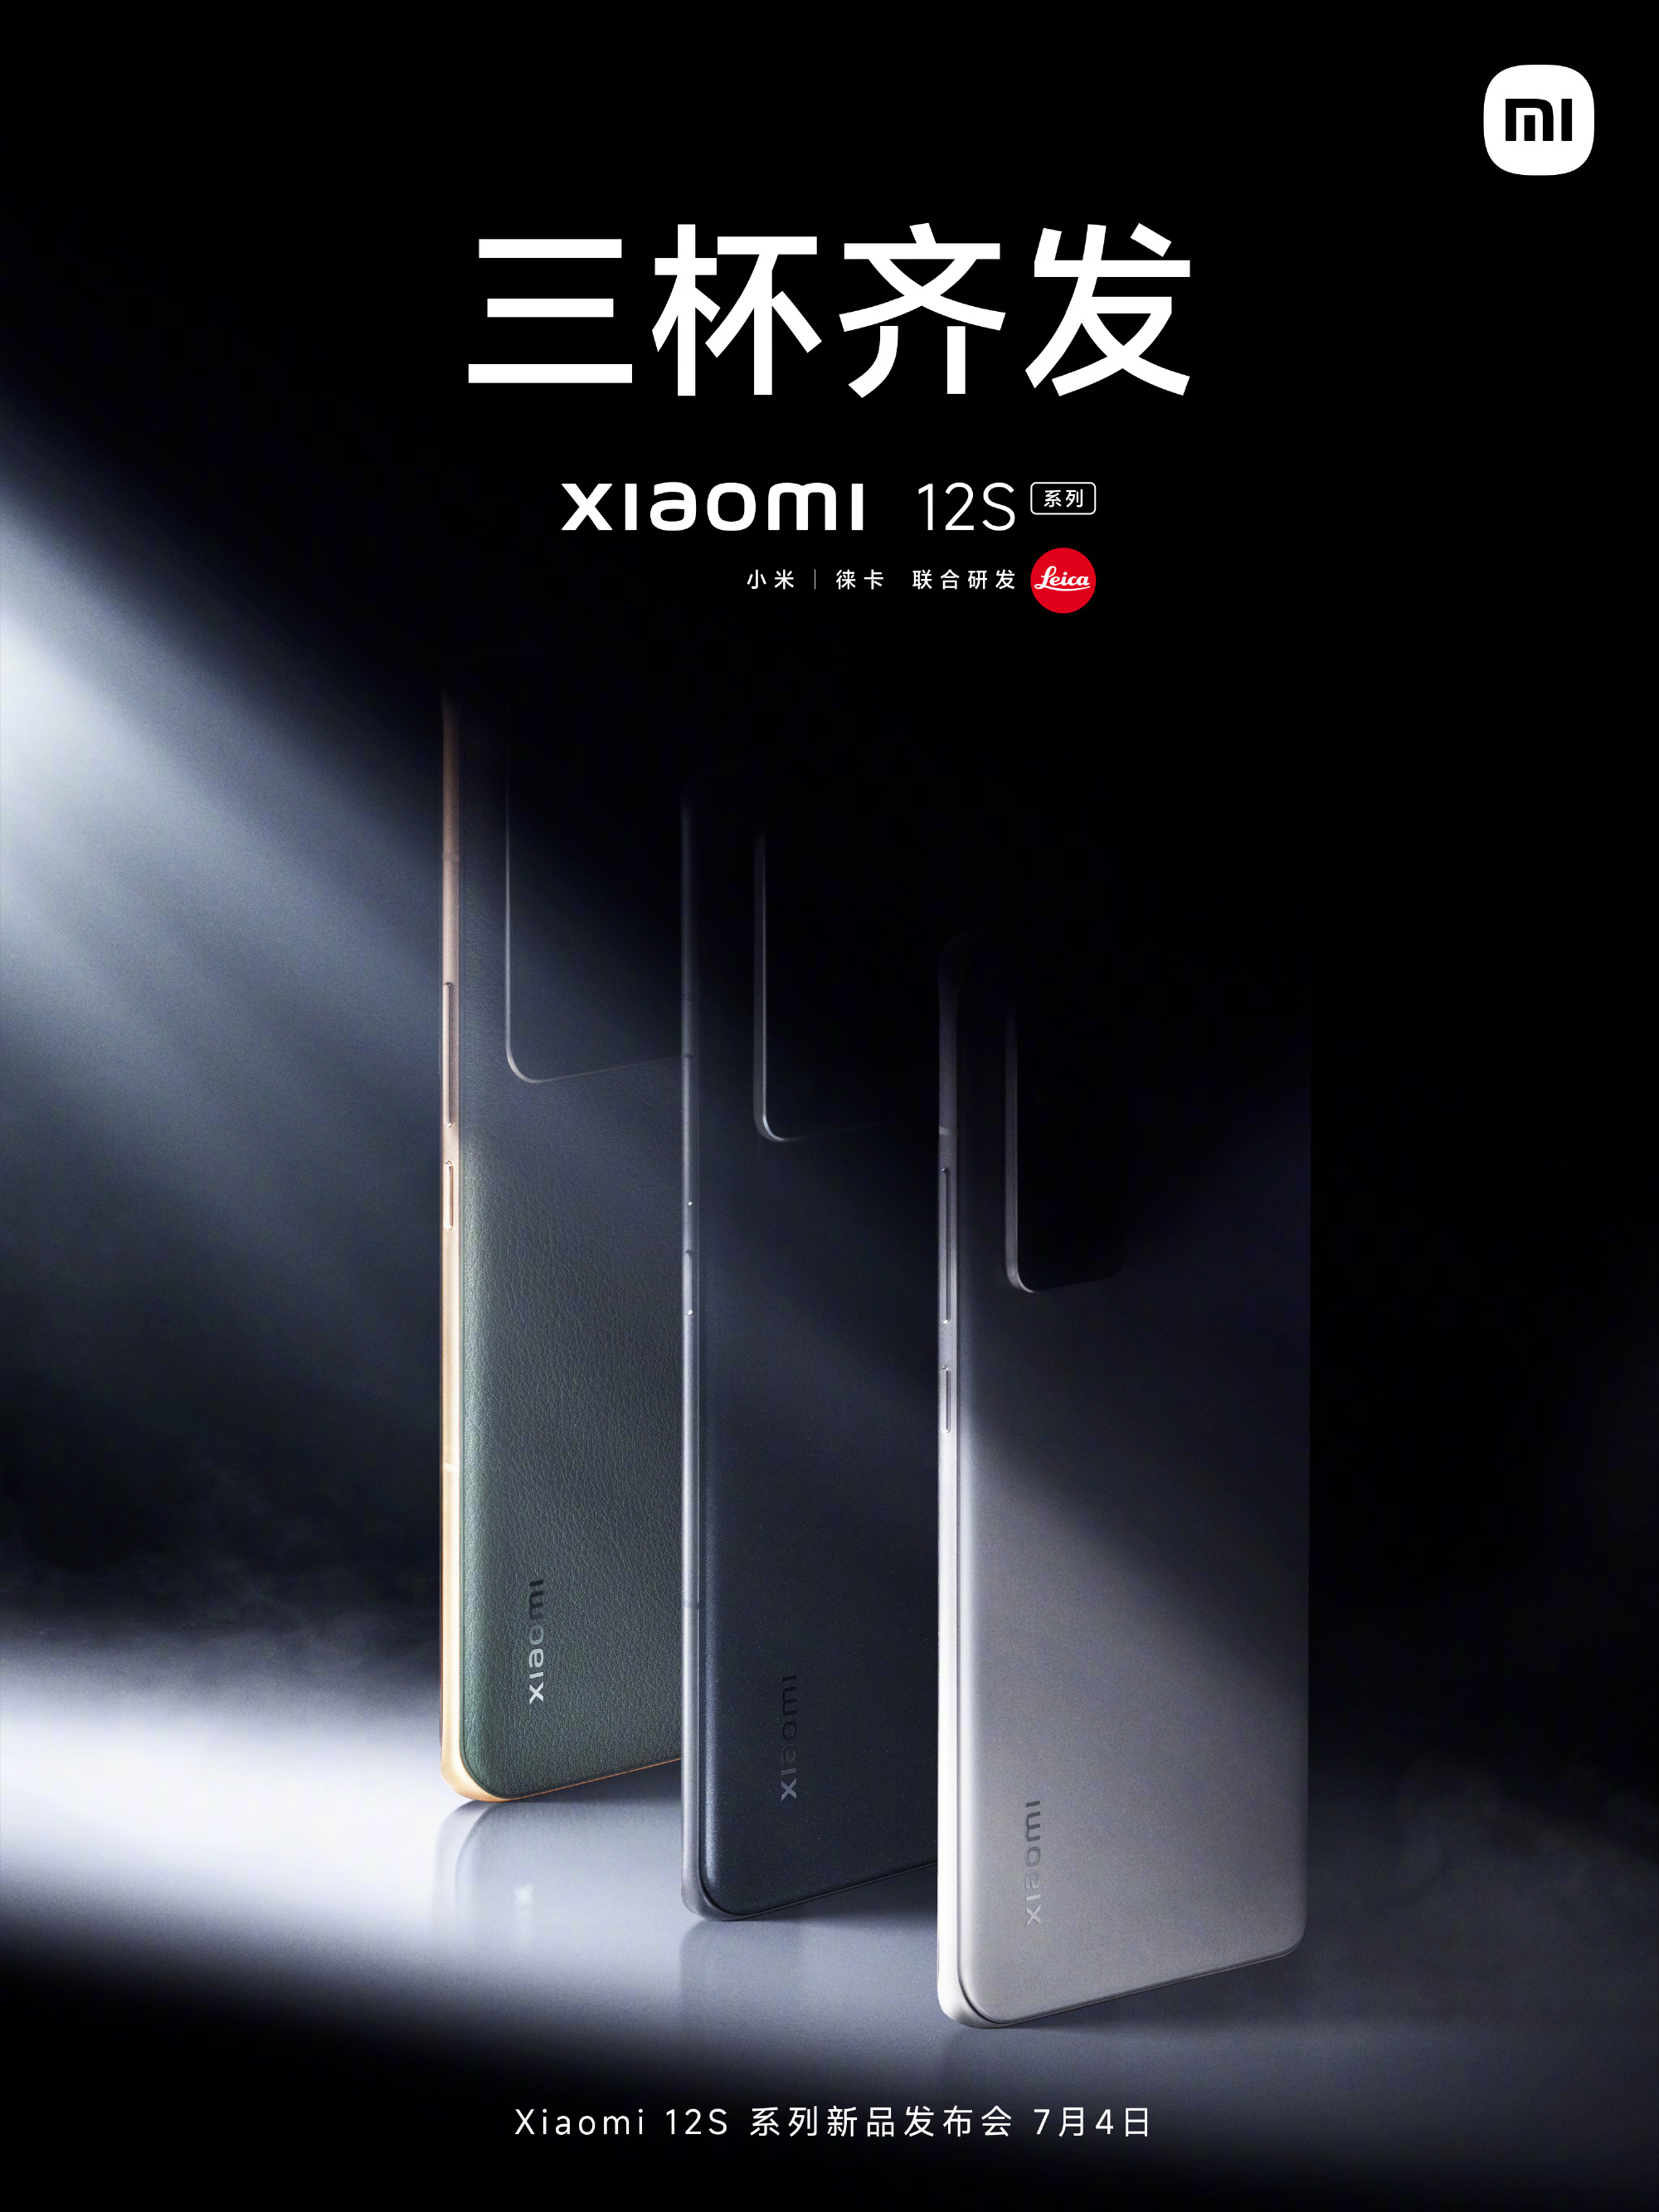 Xiaomi's 12S Phones Arrive Soon, Leica Cameras Included